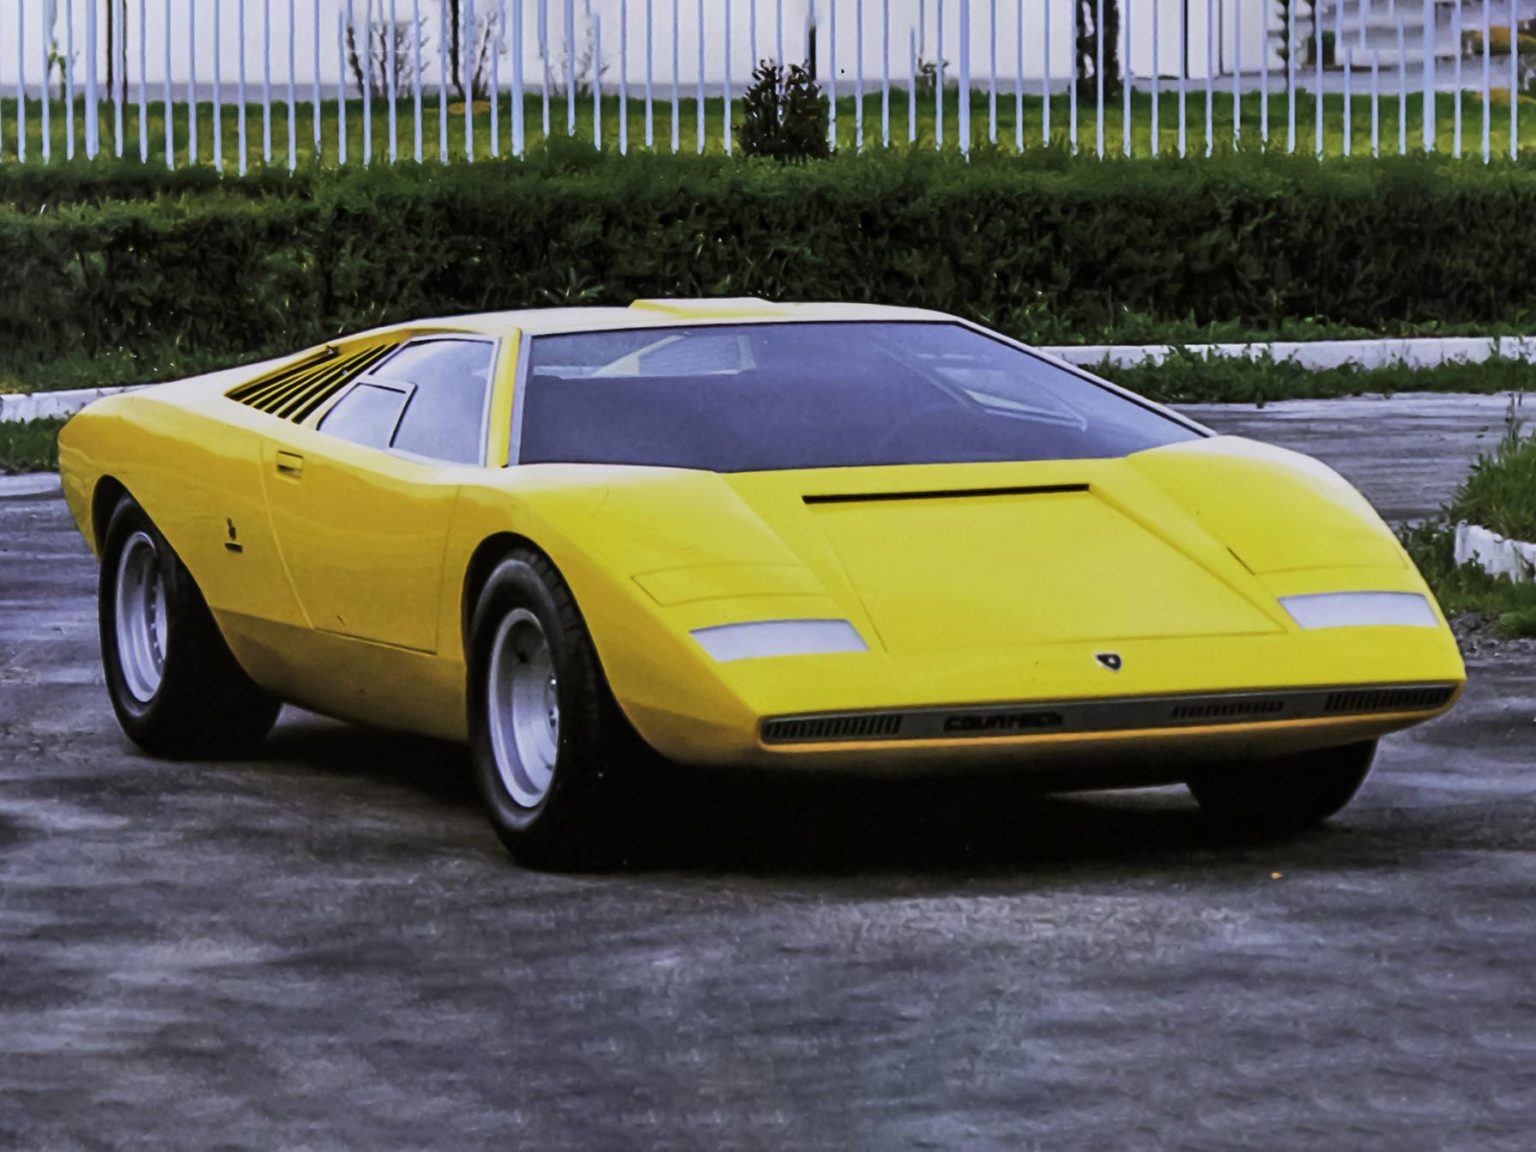 The Lamborghini Countach LP 500 was the star of the Geneva Motor Show 50 years ago.